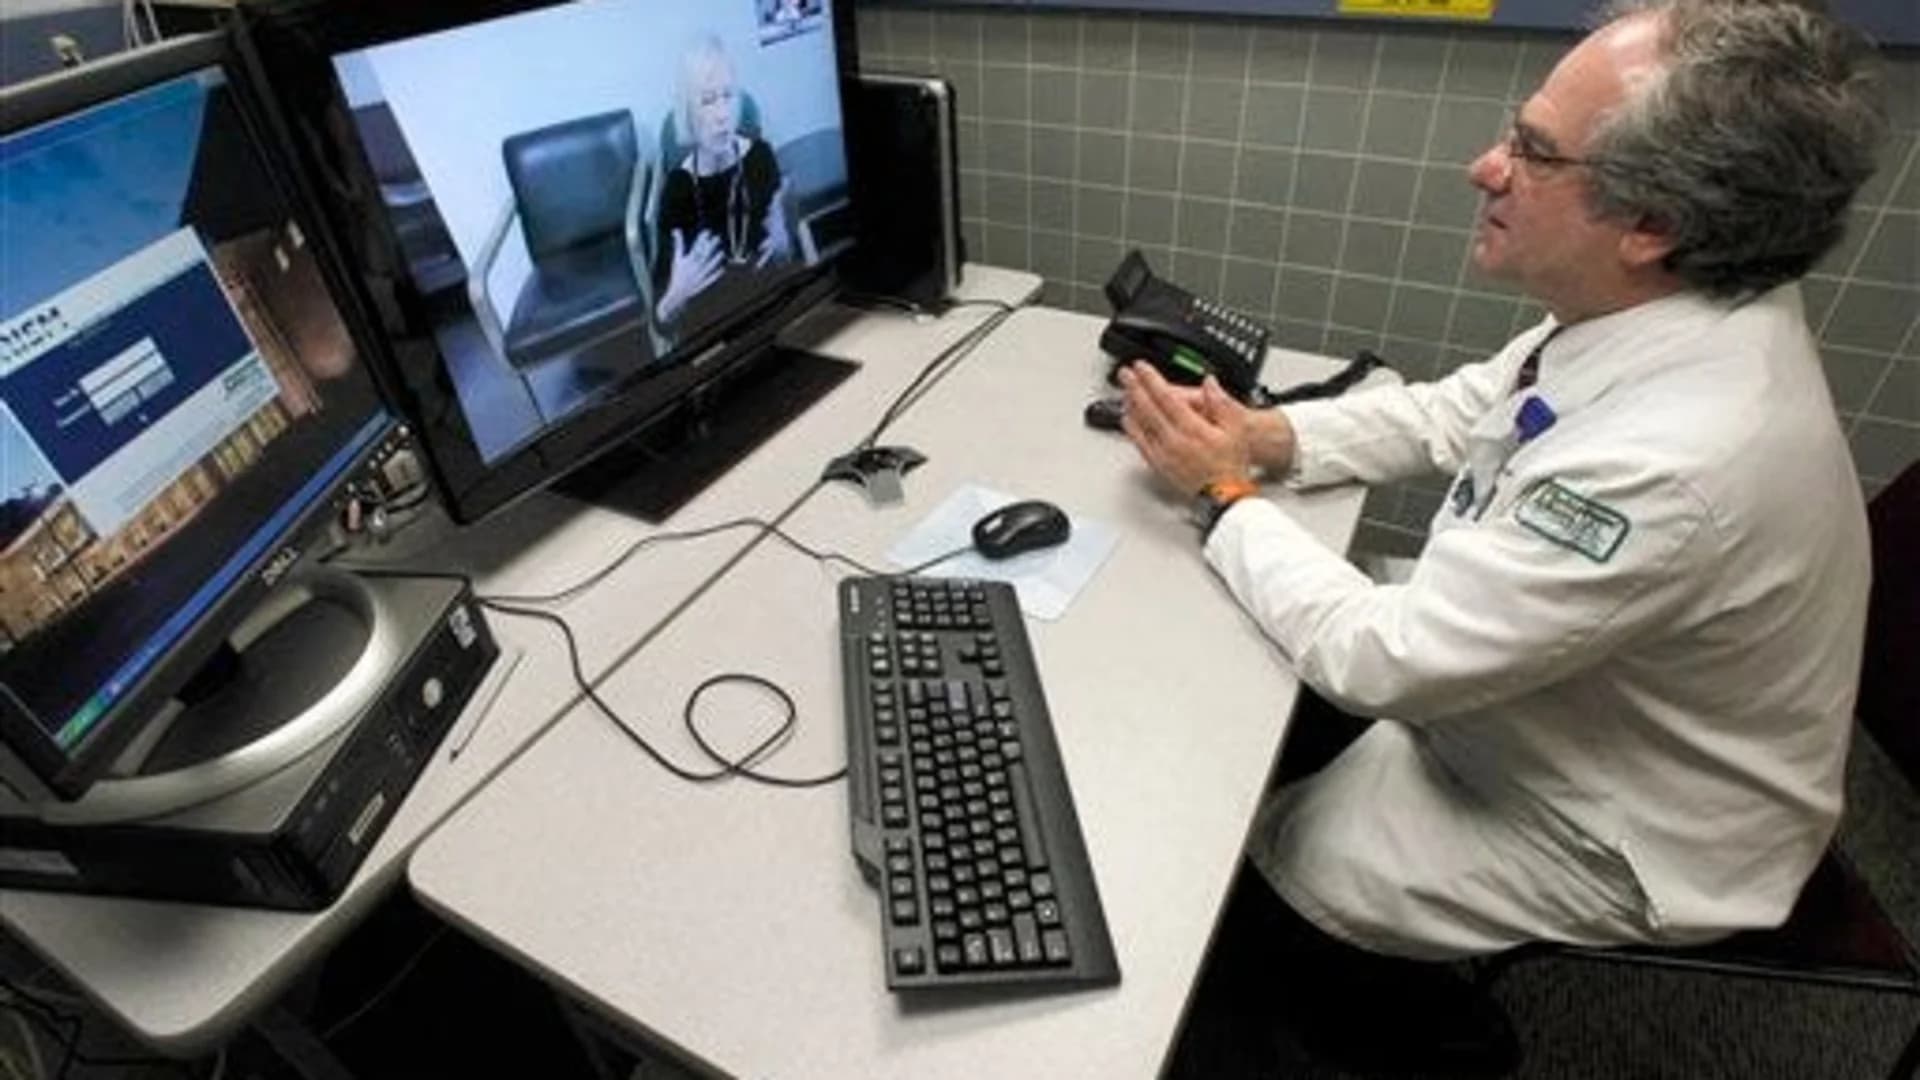 To keep seniors safe at home, Medicare expands telemedicine